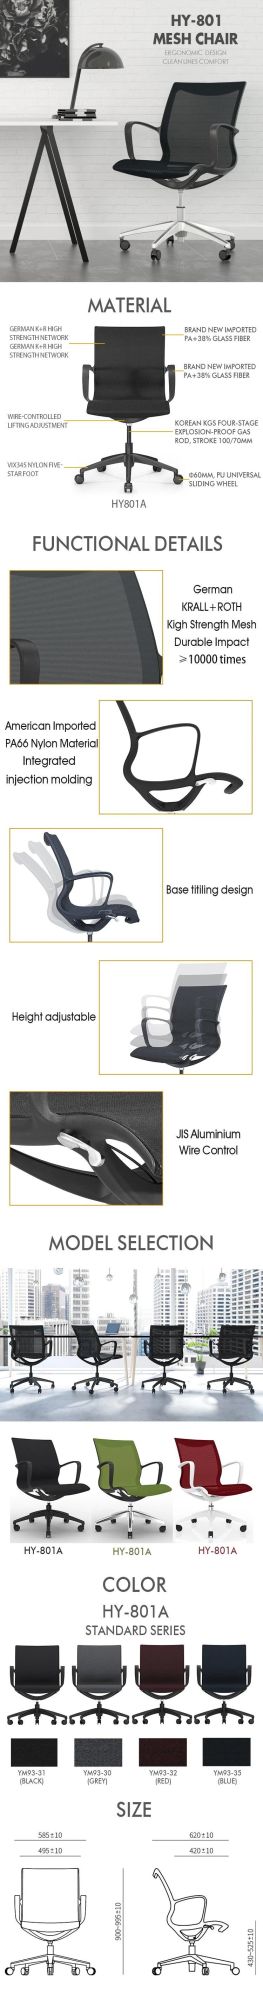 China Supplier Office Mesh Chair Adjustable Swivel Chair Sillas De Oficina